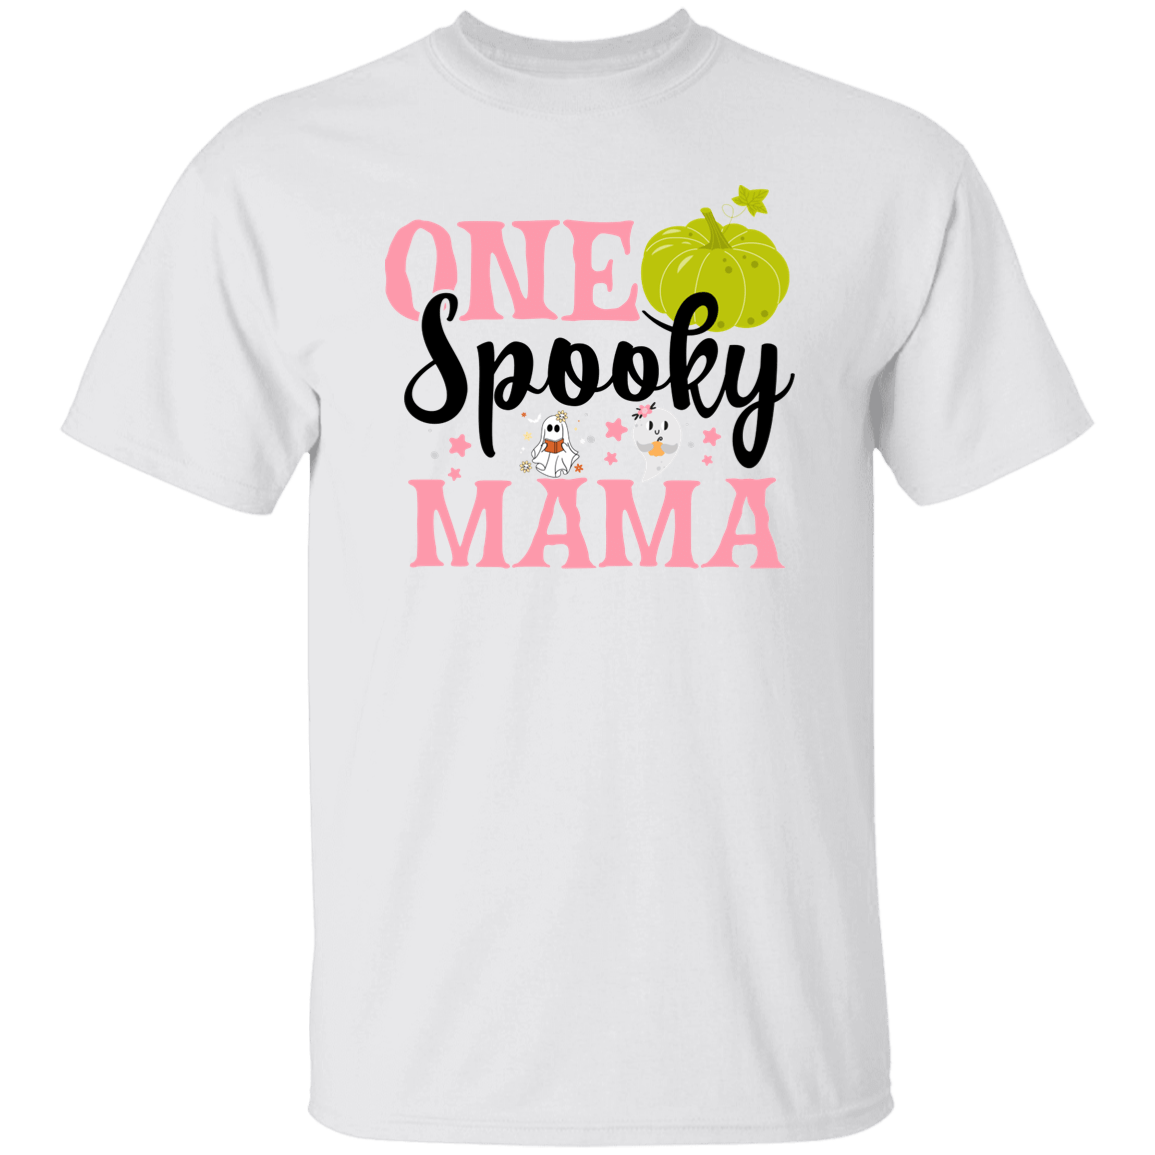 One Spooky Mama T-Shirt